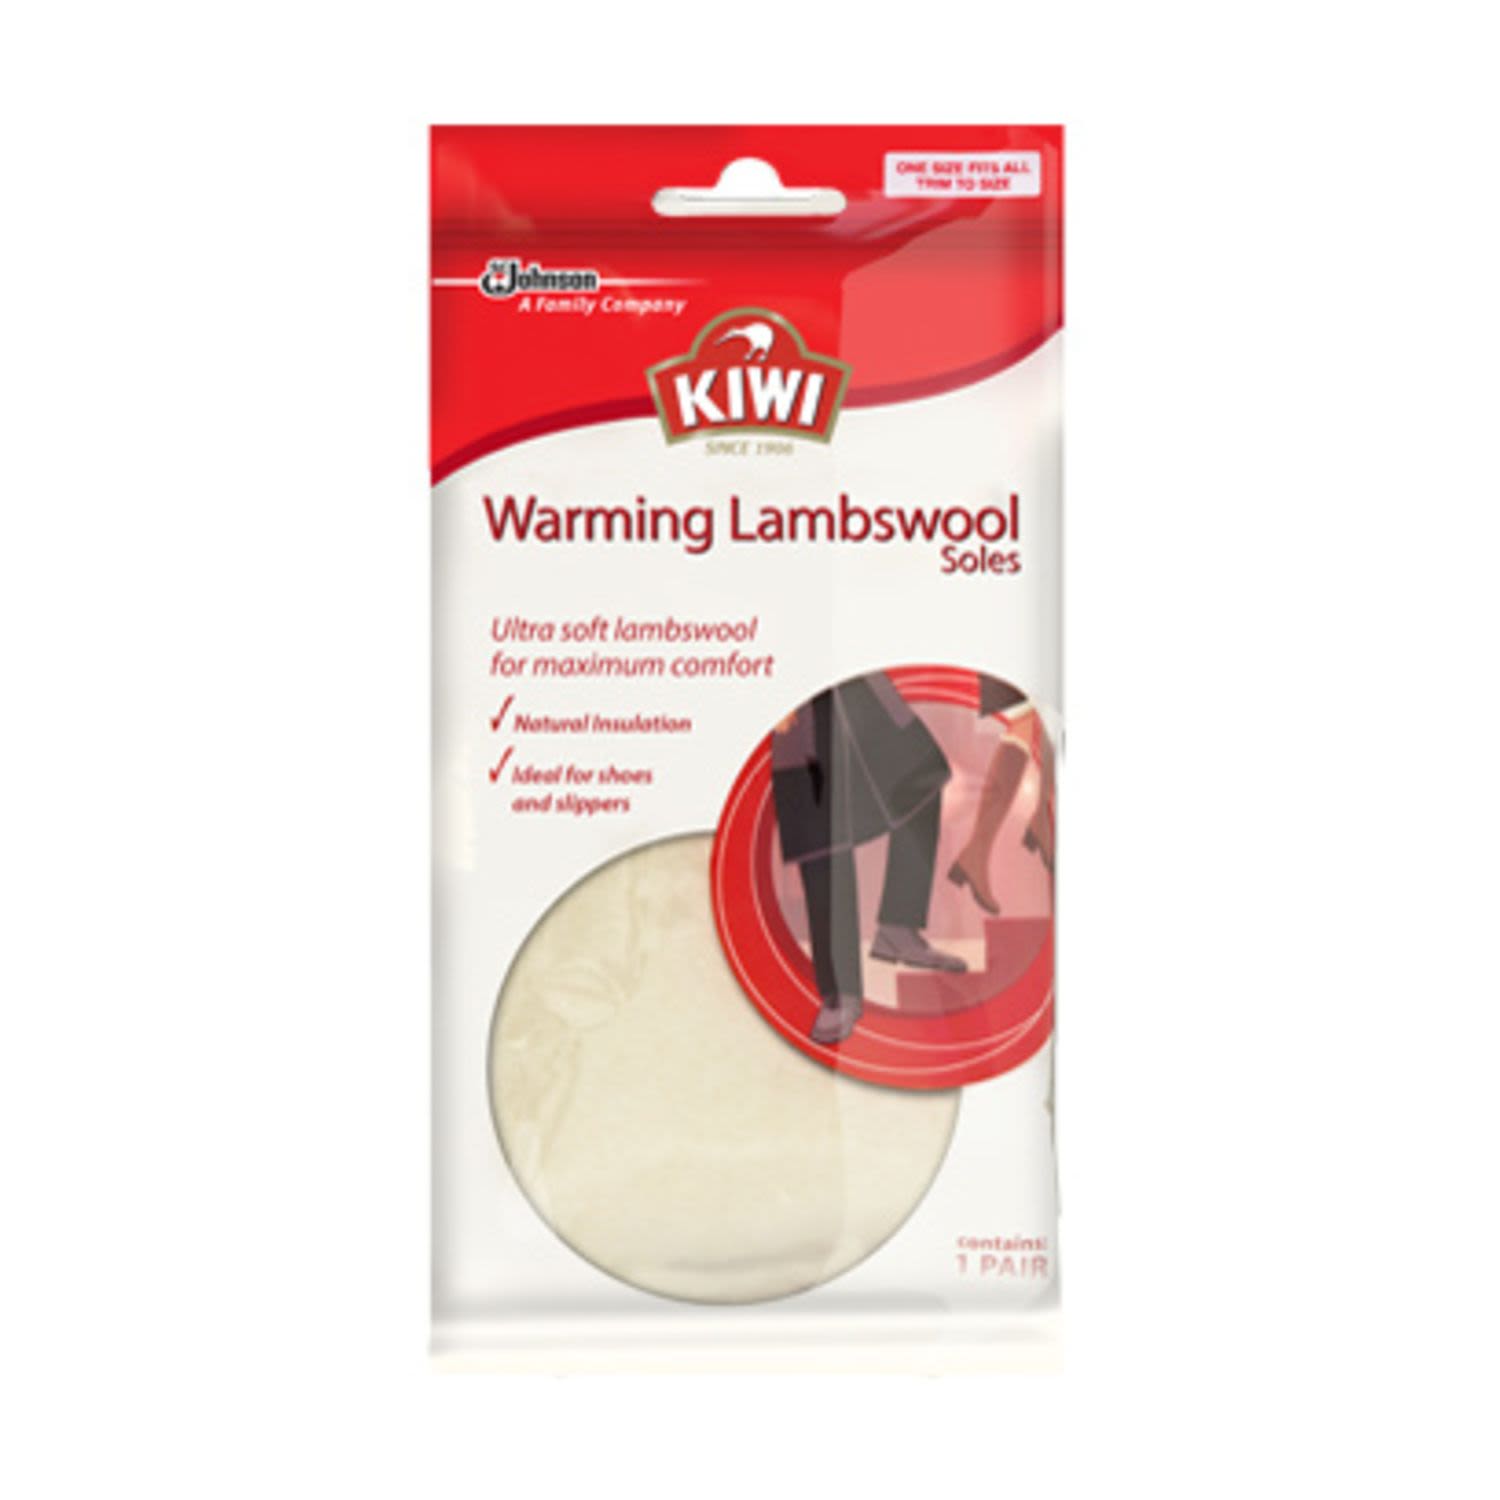 Kiwi Warming Lambswool Insoles, 1 Each